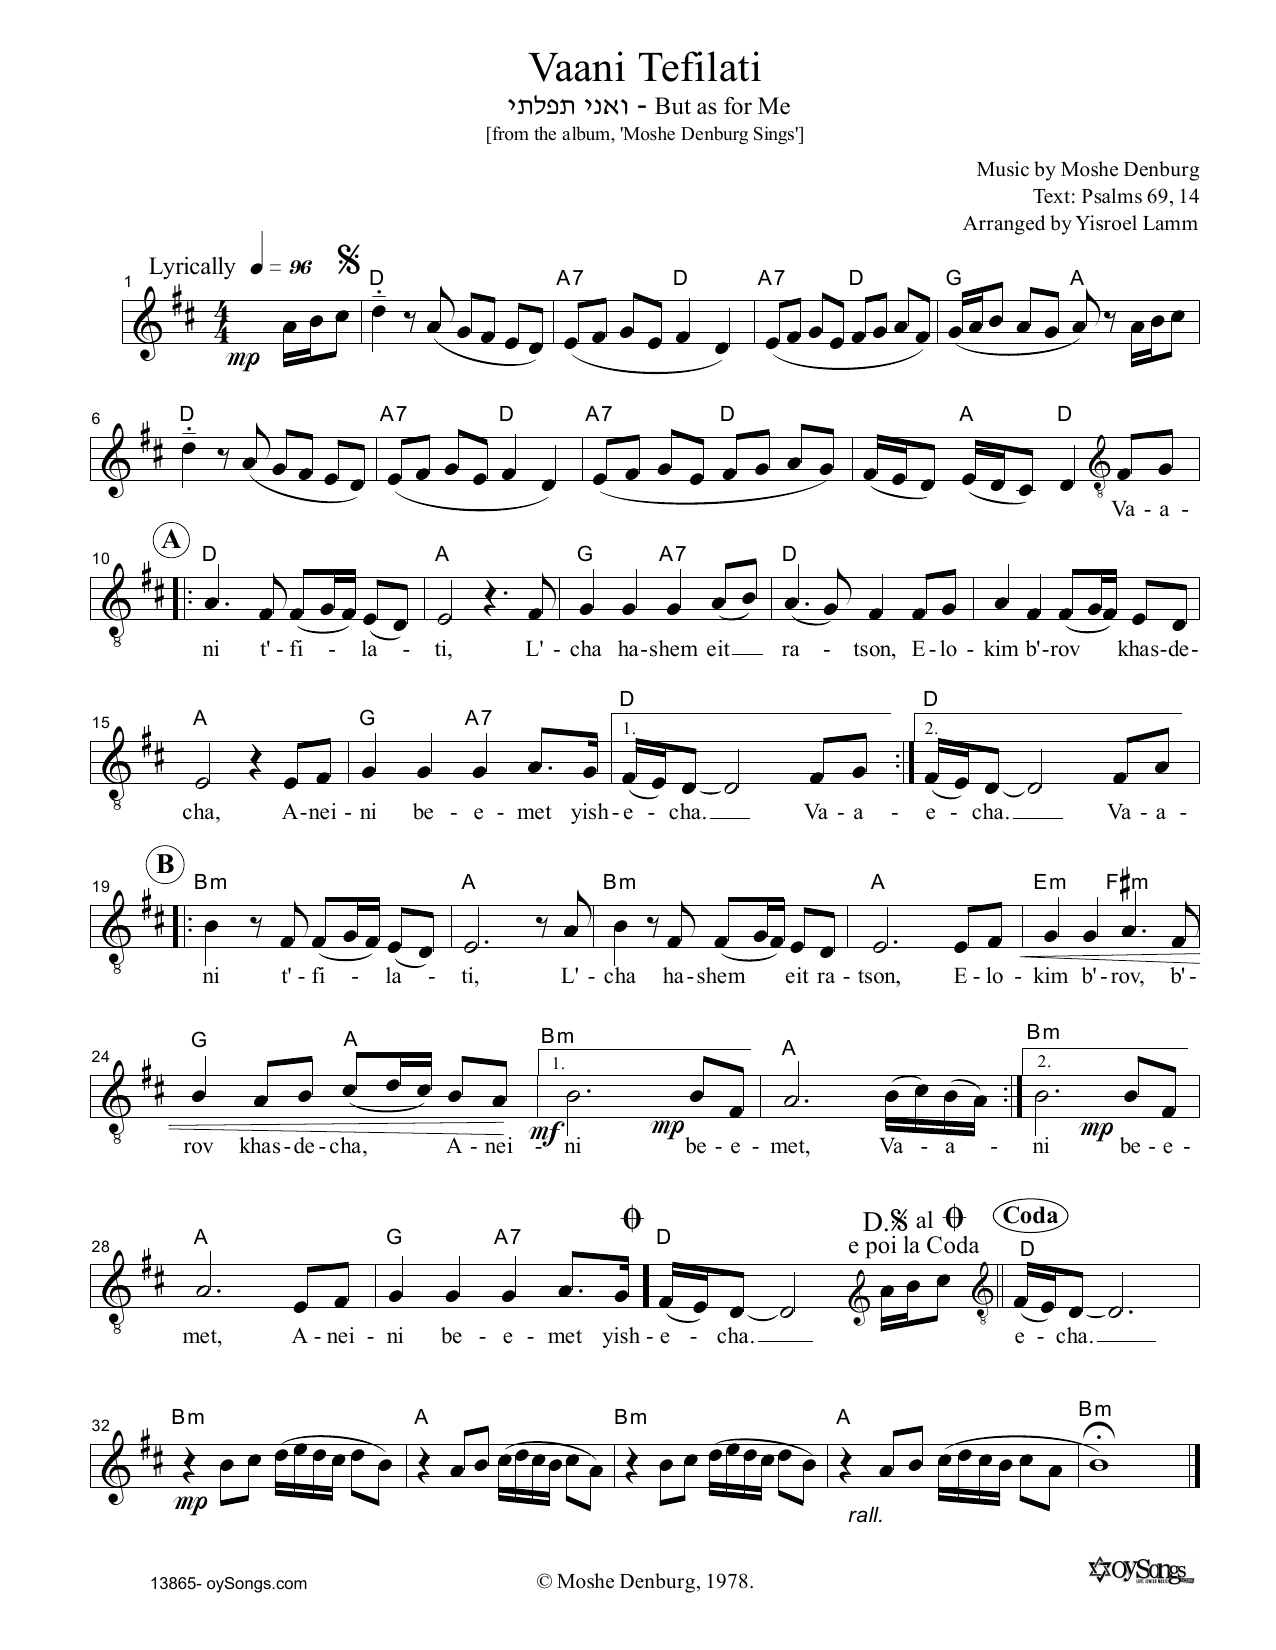 Moshe Denburg Vaani Tefilati Sheet Music Notes & Chords for Melody Line, Lyrics & Chords - Download or Print PDF